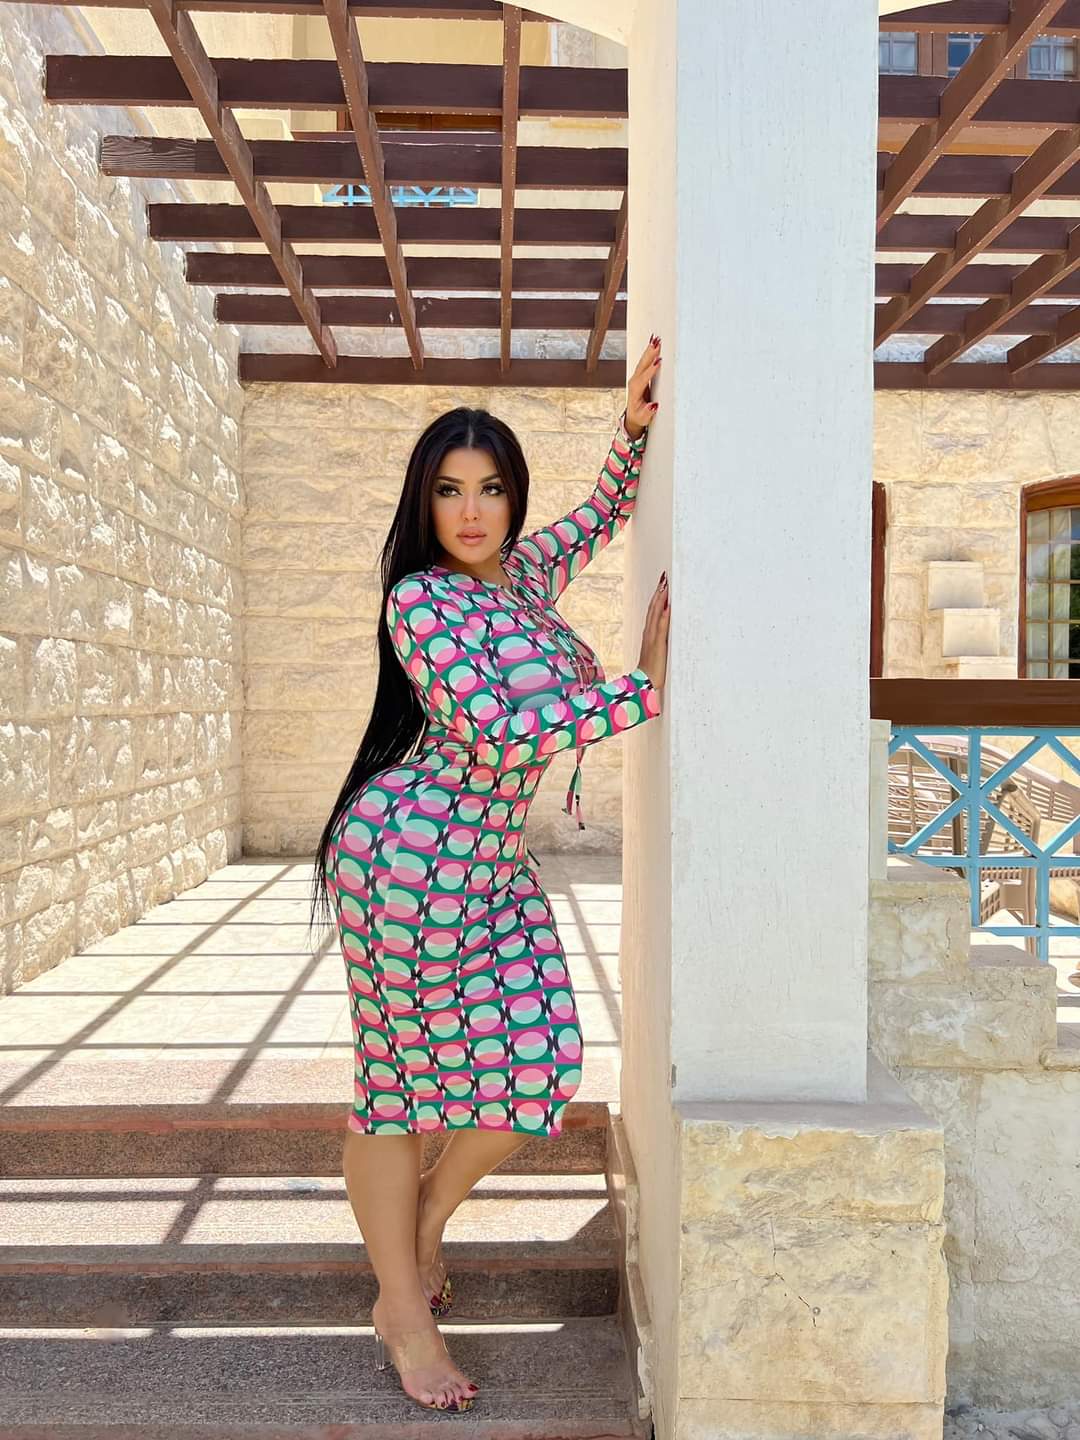 Arabic Super Curvy Model Salma Elshimy. Salma Elshimy hot photos and videos. Salma Elshimy in bikini videos. Salma Elshimy Youtube. Salma Elshimy xxx